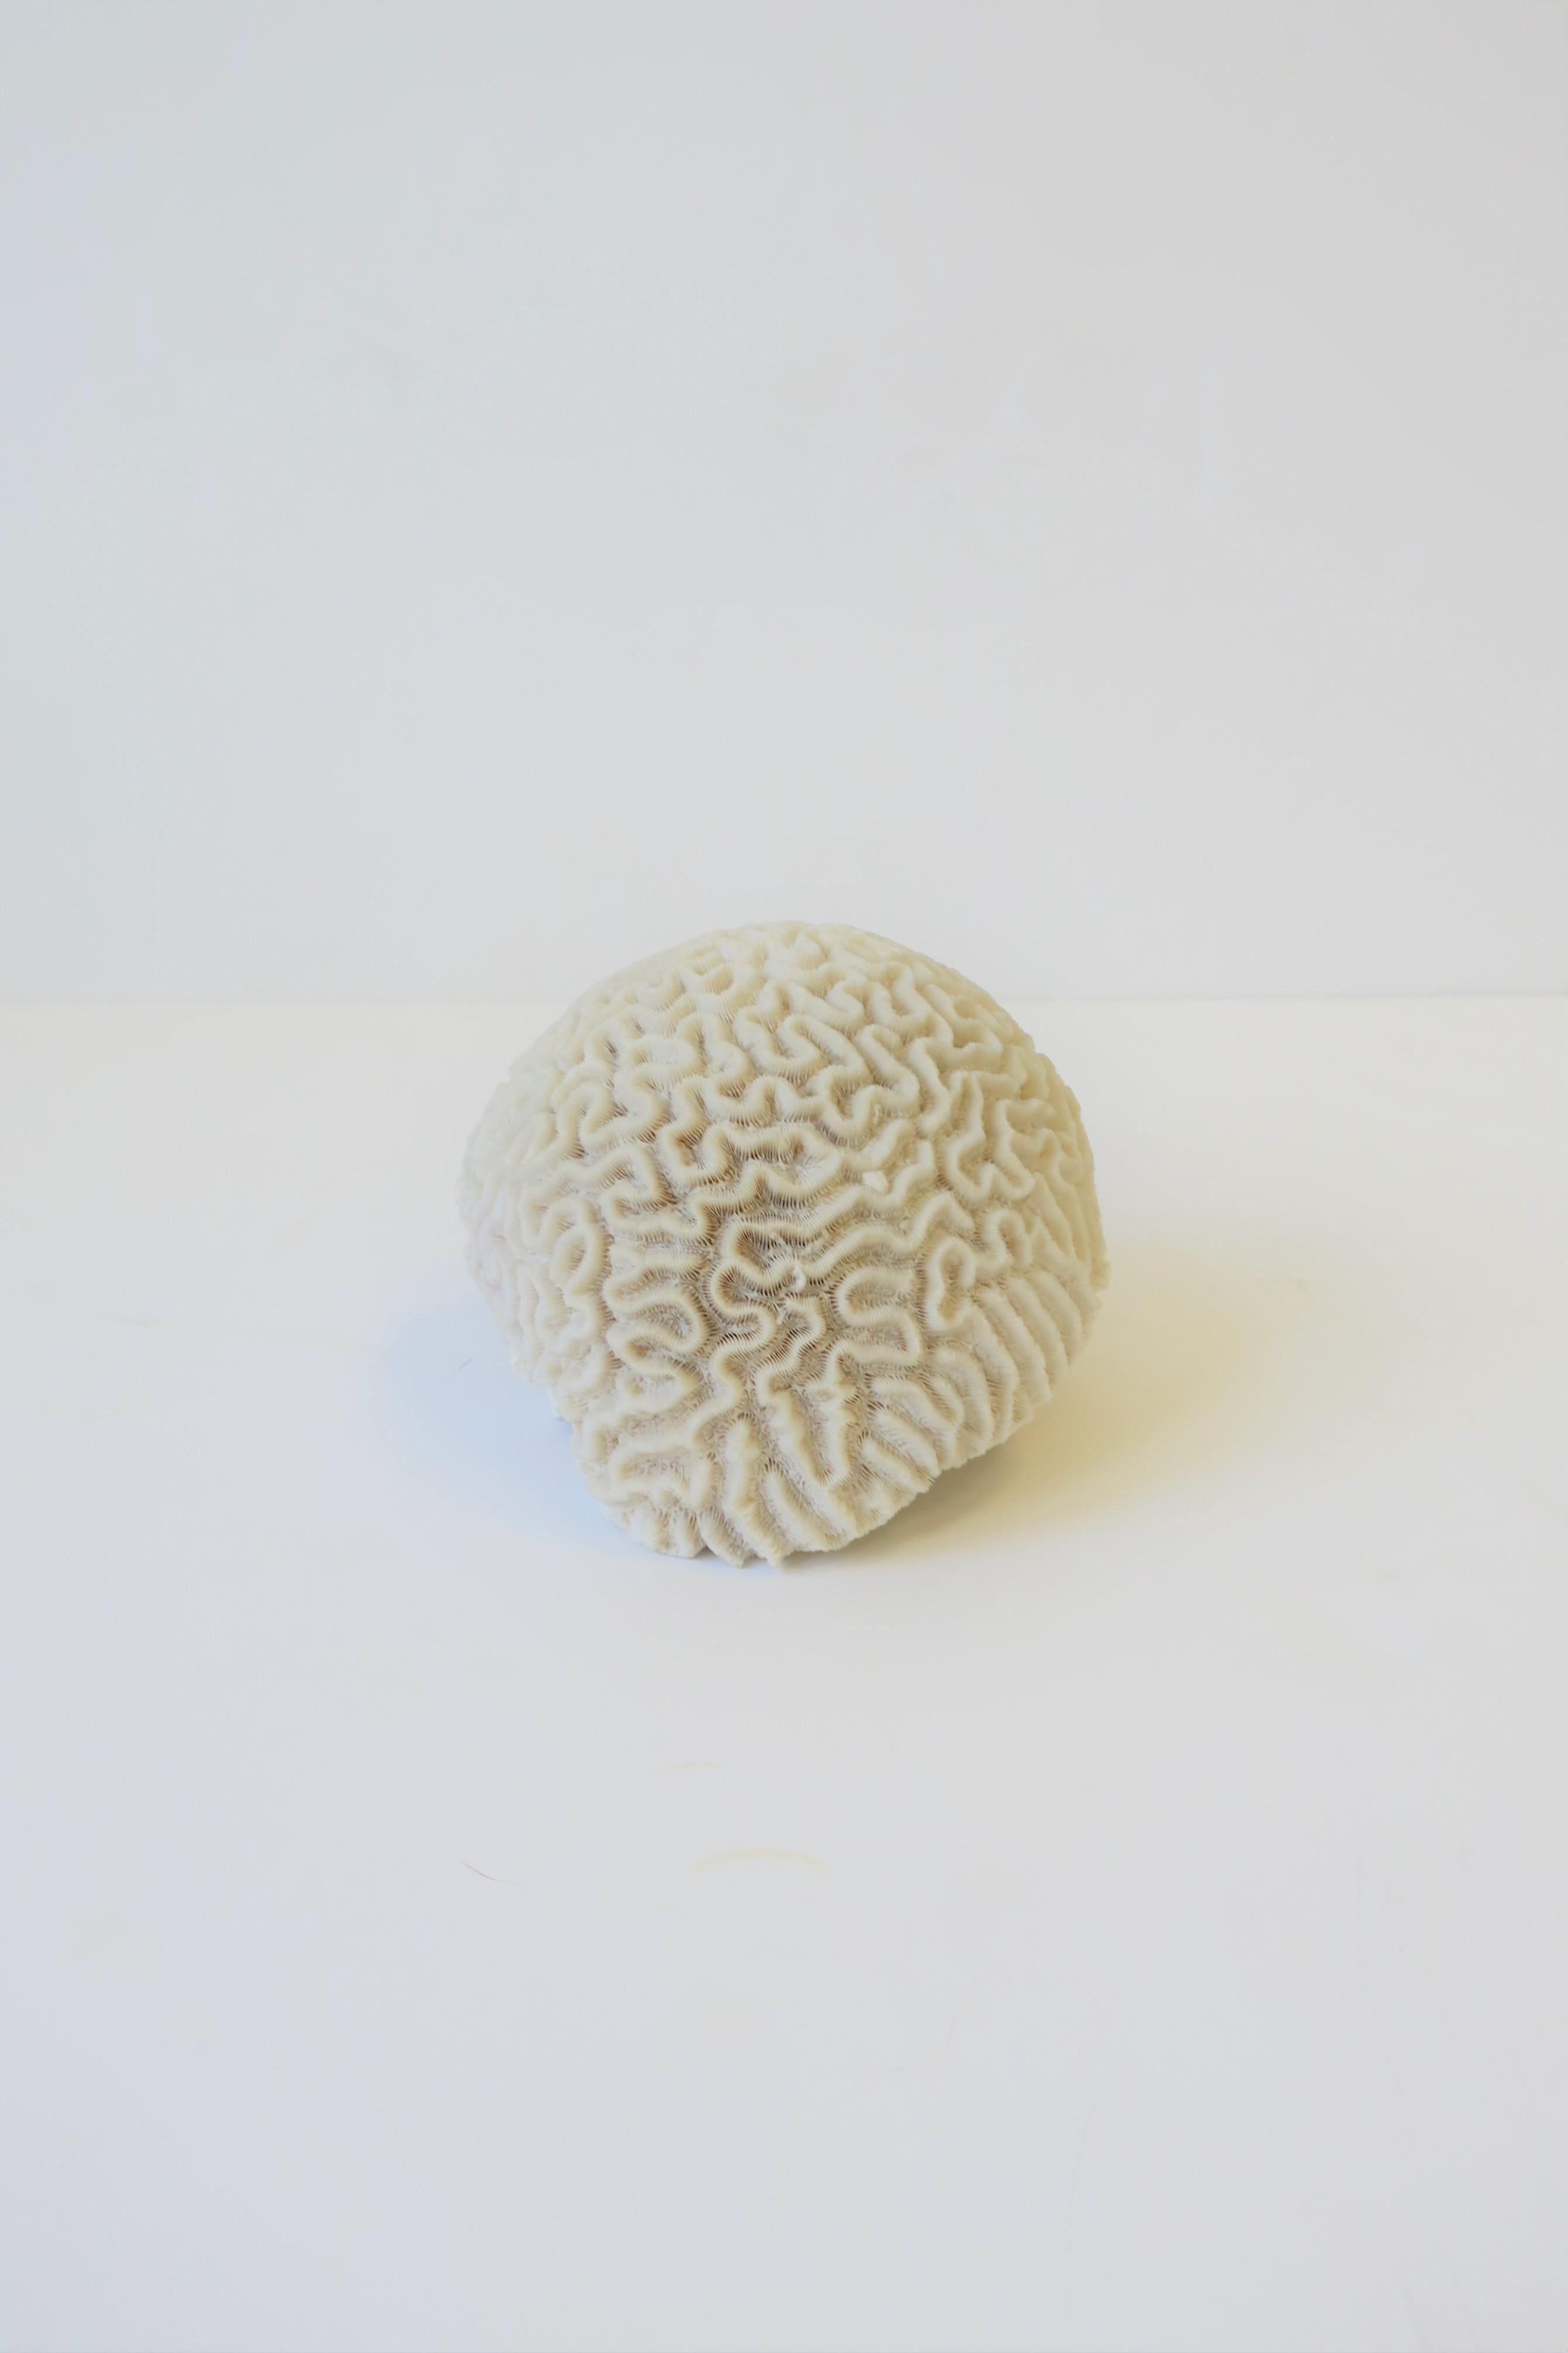 Organic Modern Natural White Brain Coral